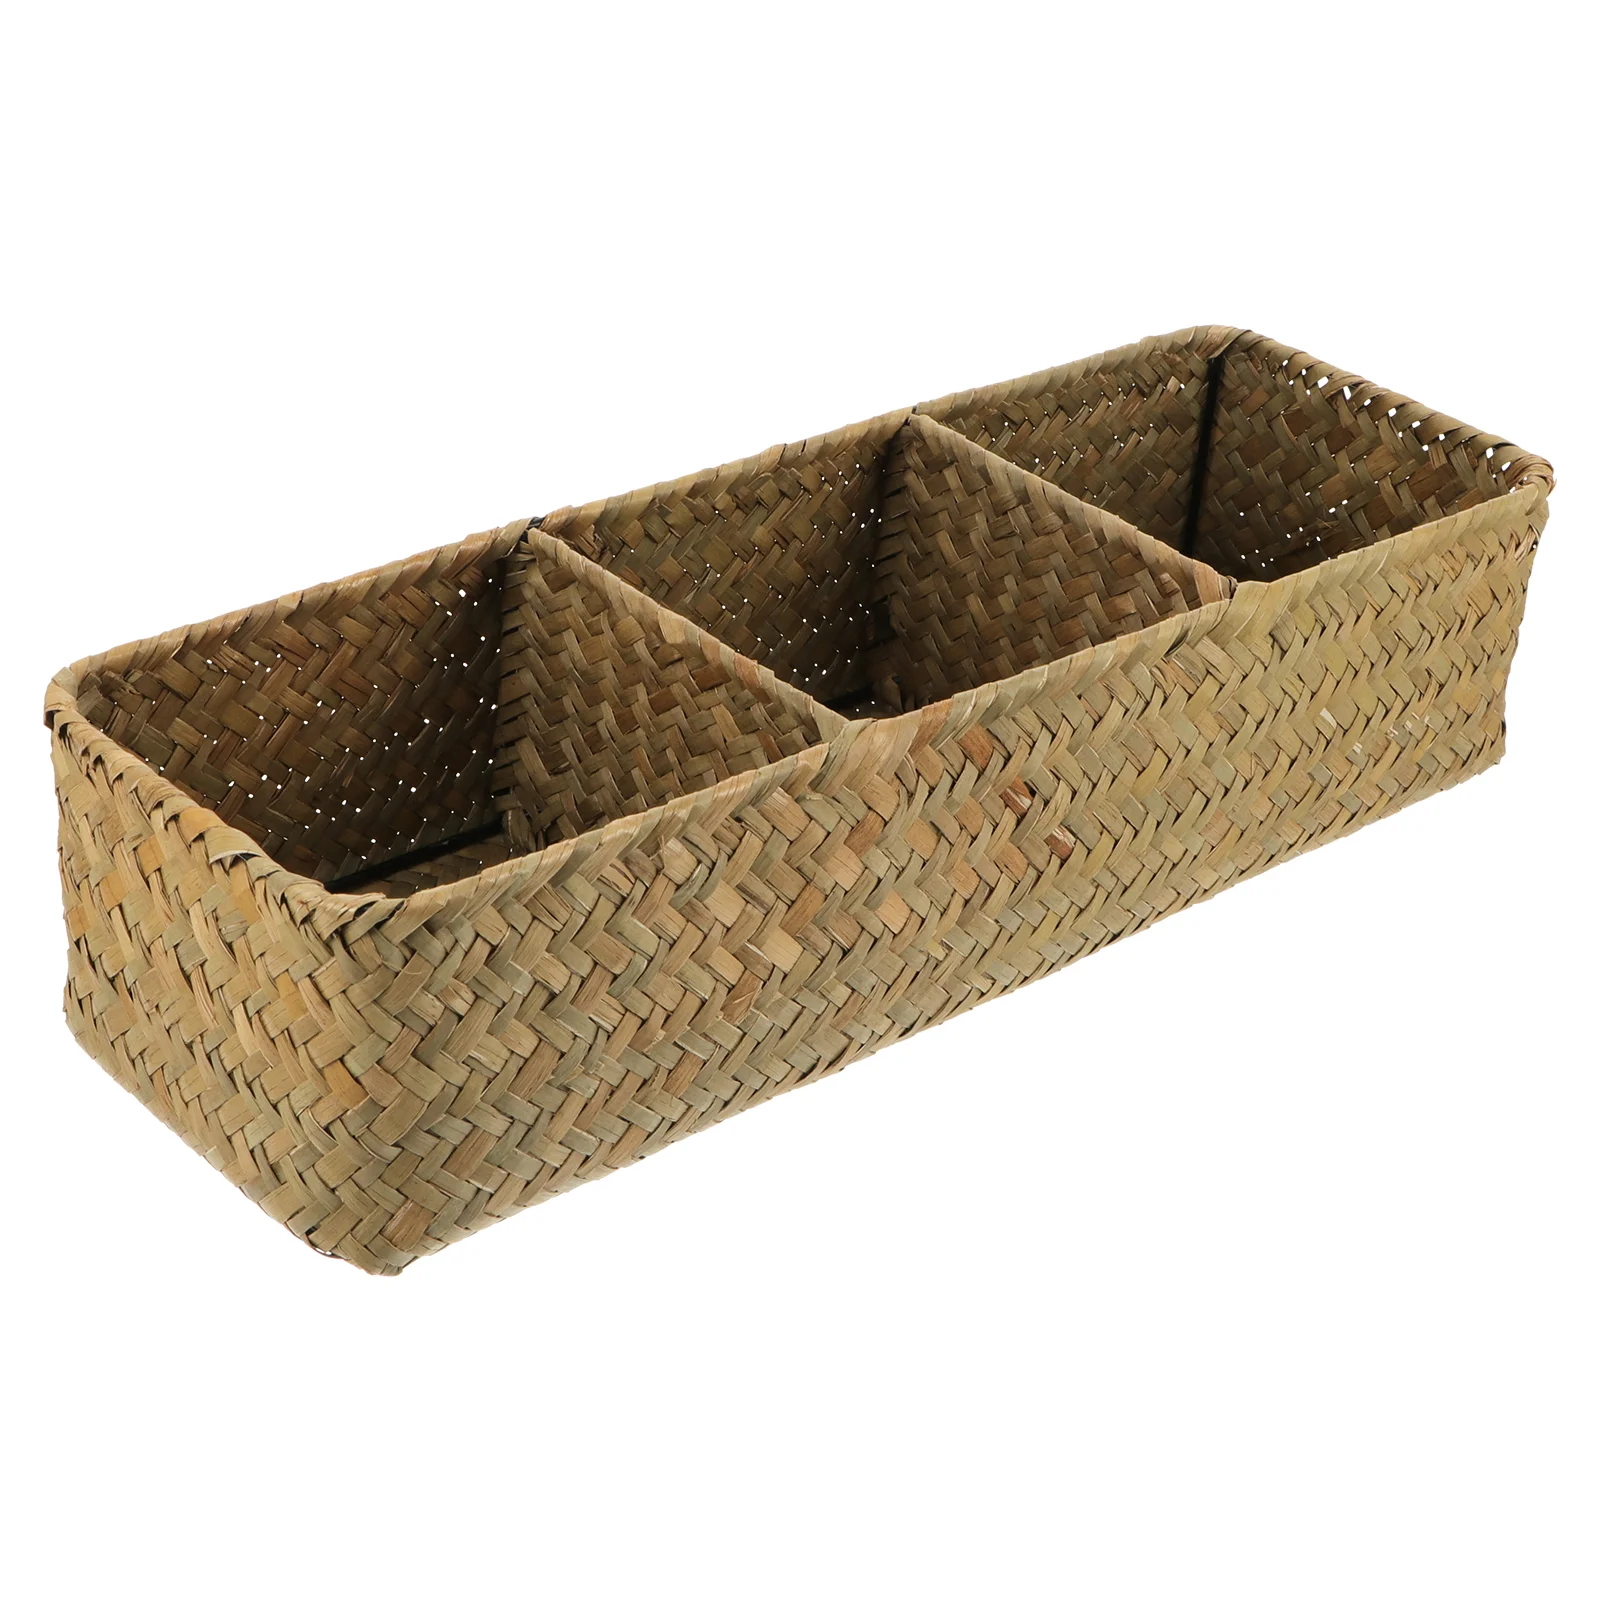 

Basket Storage Baskets Organizer Bathroom Woven Wicker Rattan Small Boxseagrass Bins Hyacinth Cosmetics Makeup Paper Toilet